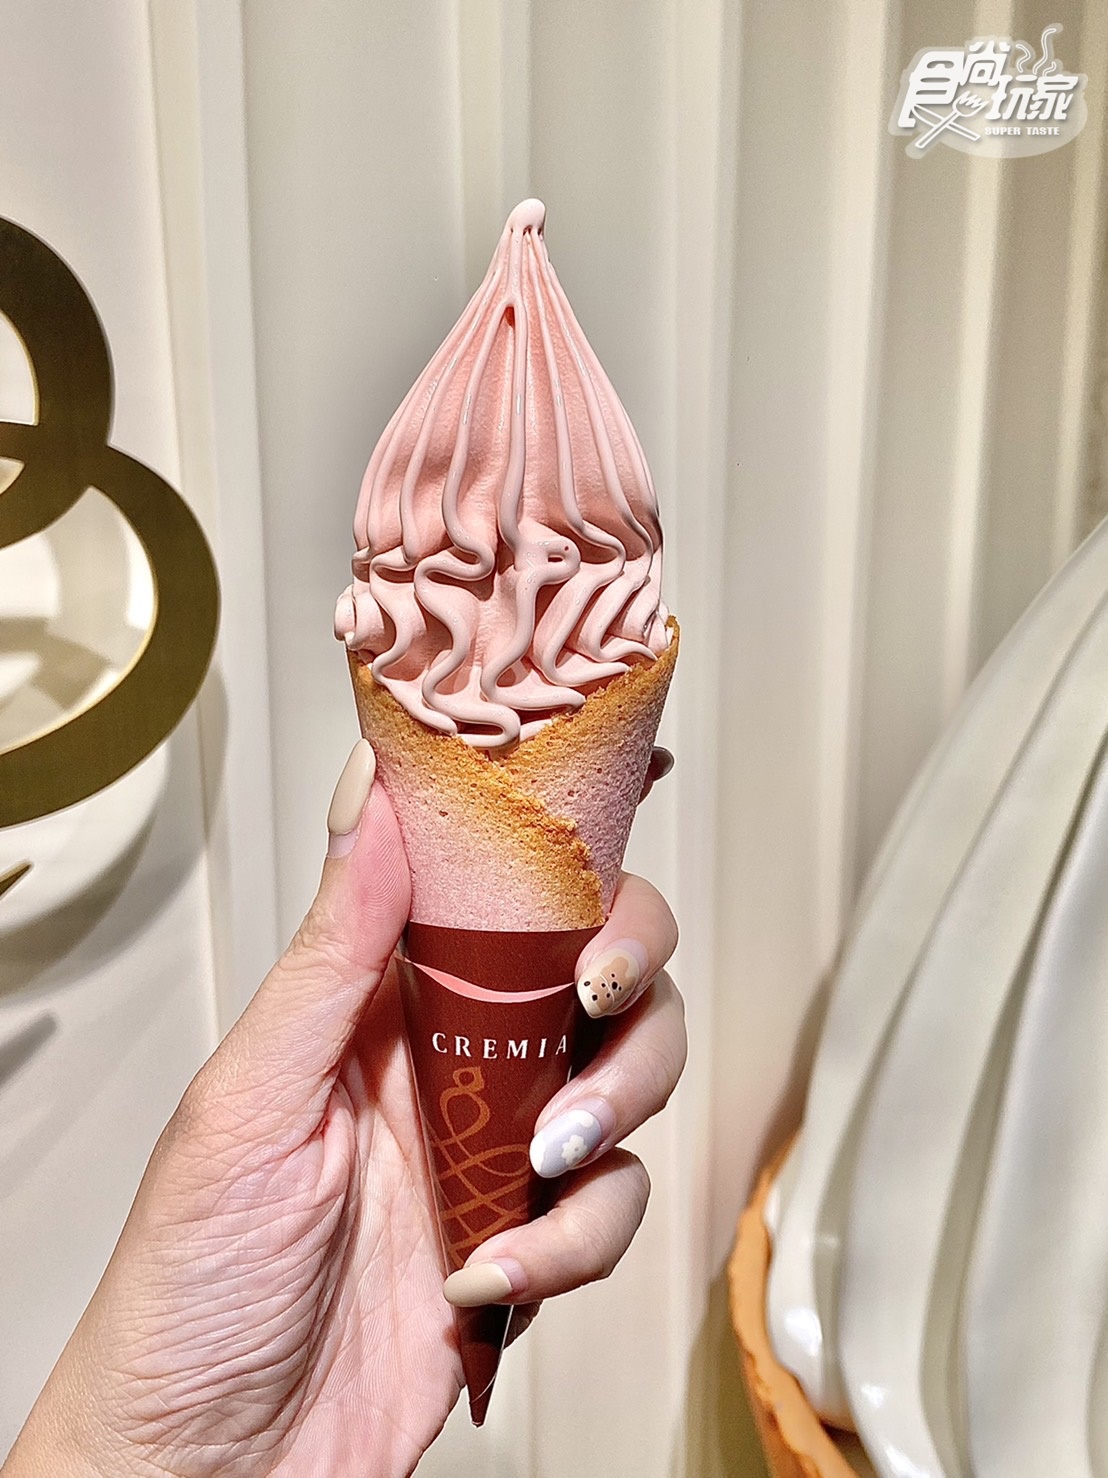 CREMIA霜淇淋有草莓口味了！「福岡甘王草莓」台灣獨家有，粉嫩香甜吃爆